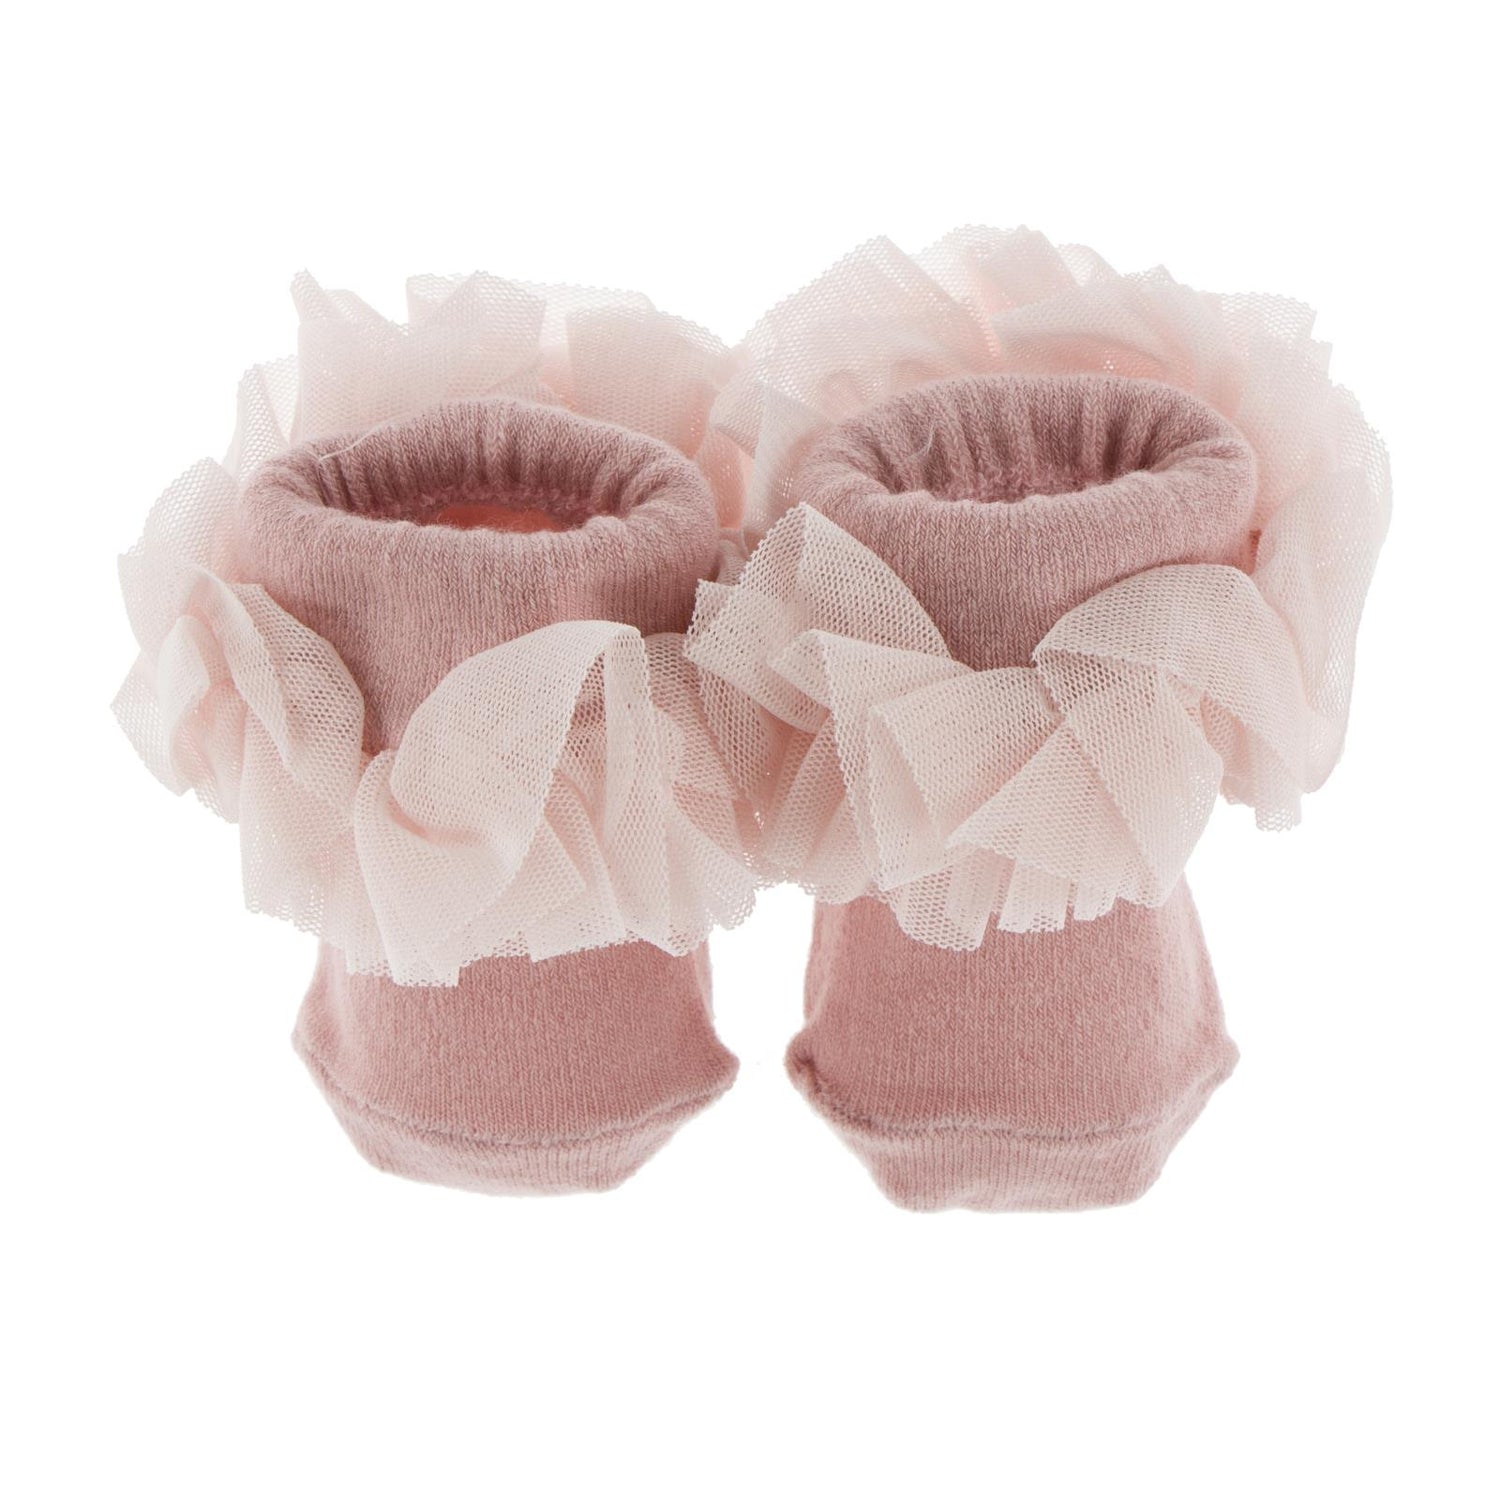 Baby Non-Slip Ruffle Socks in Pink